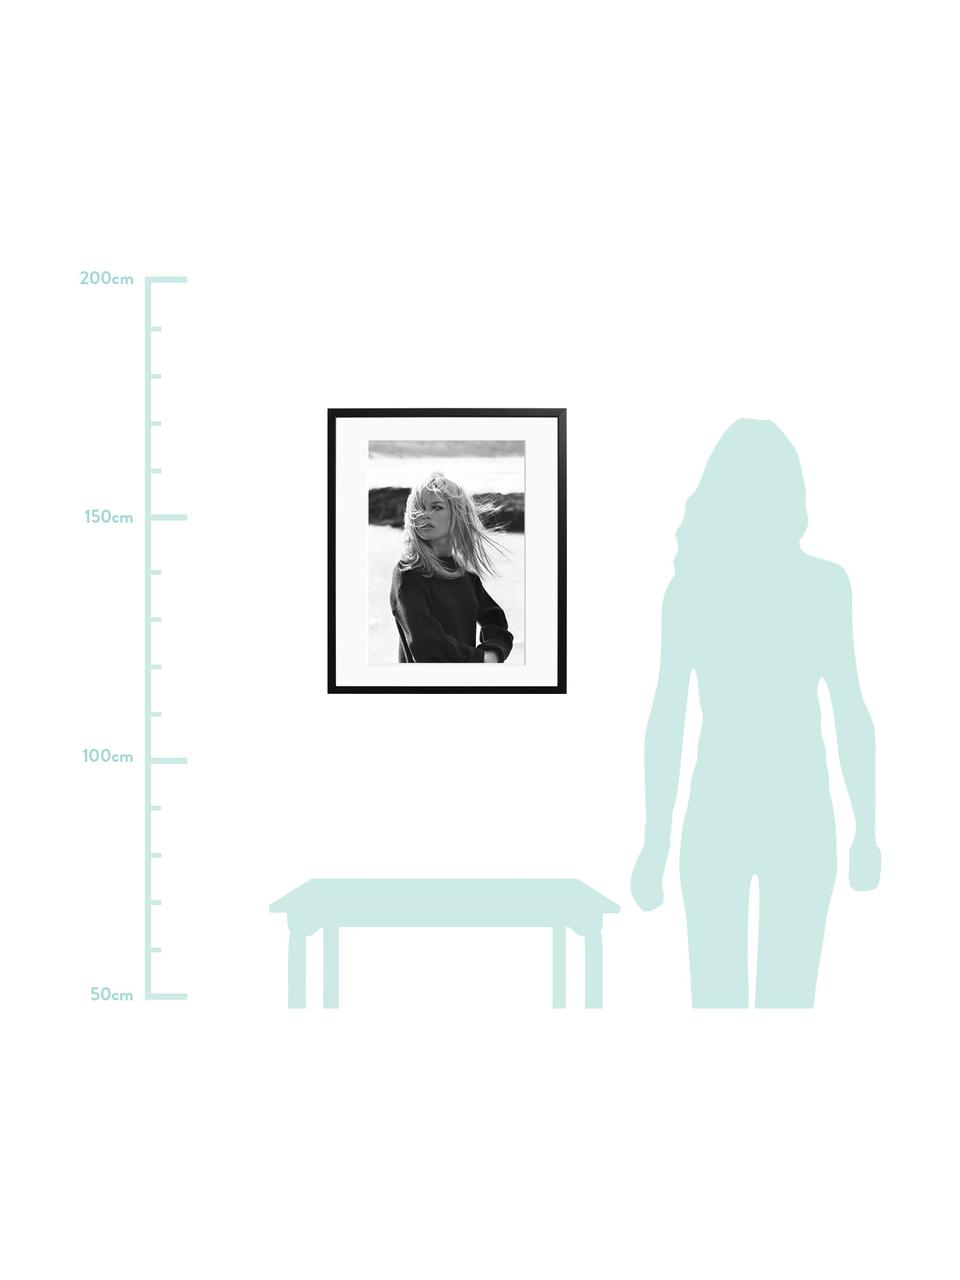 Gerahmter Fotodruck Bardot Poses, Bild: Fuji Crystal Archive Papi, Rahmen: Holz, lackiert, Front: Plexiglas, Bild: Schwarz, Weiß<br>Rahmen: Schwarz<br>Front: Transparent, 50 x 60 cm